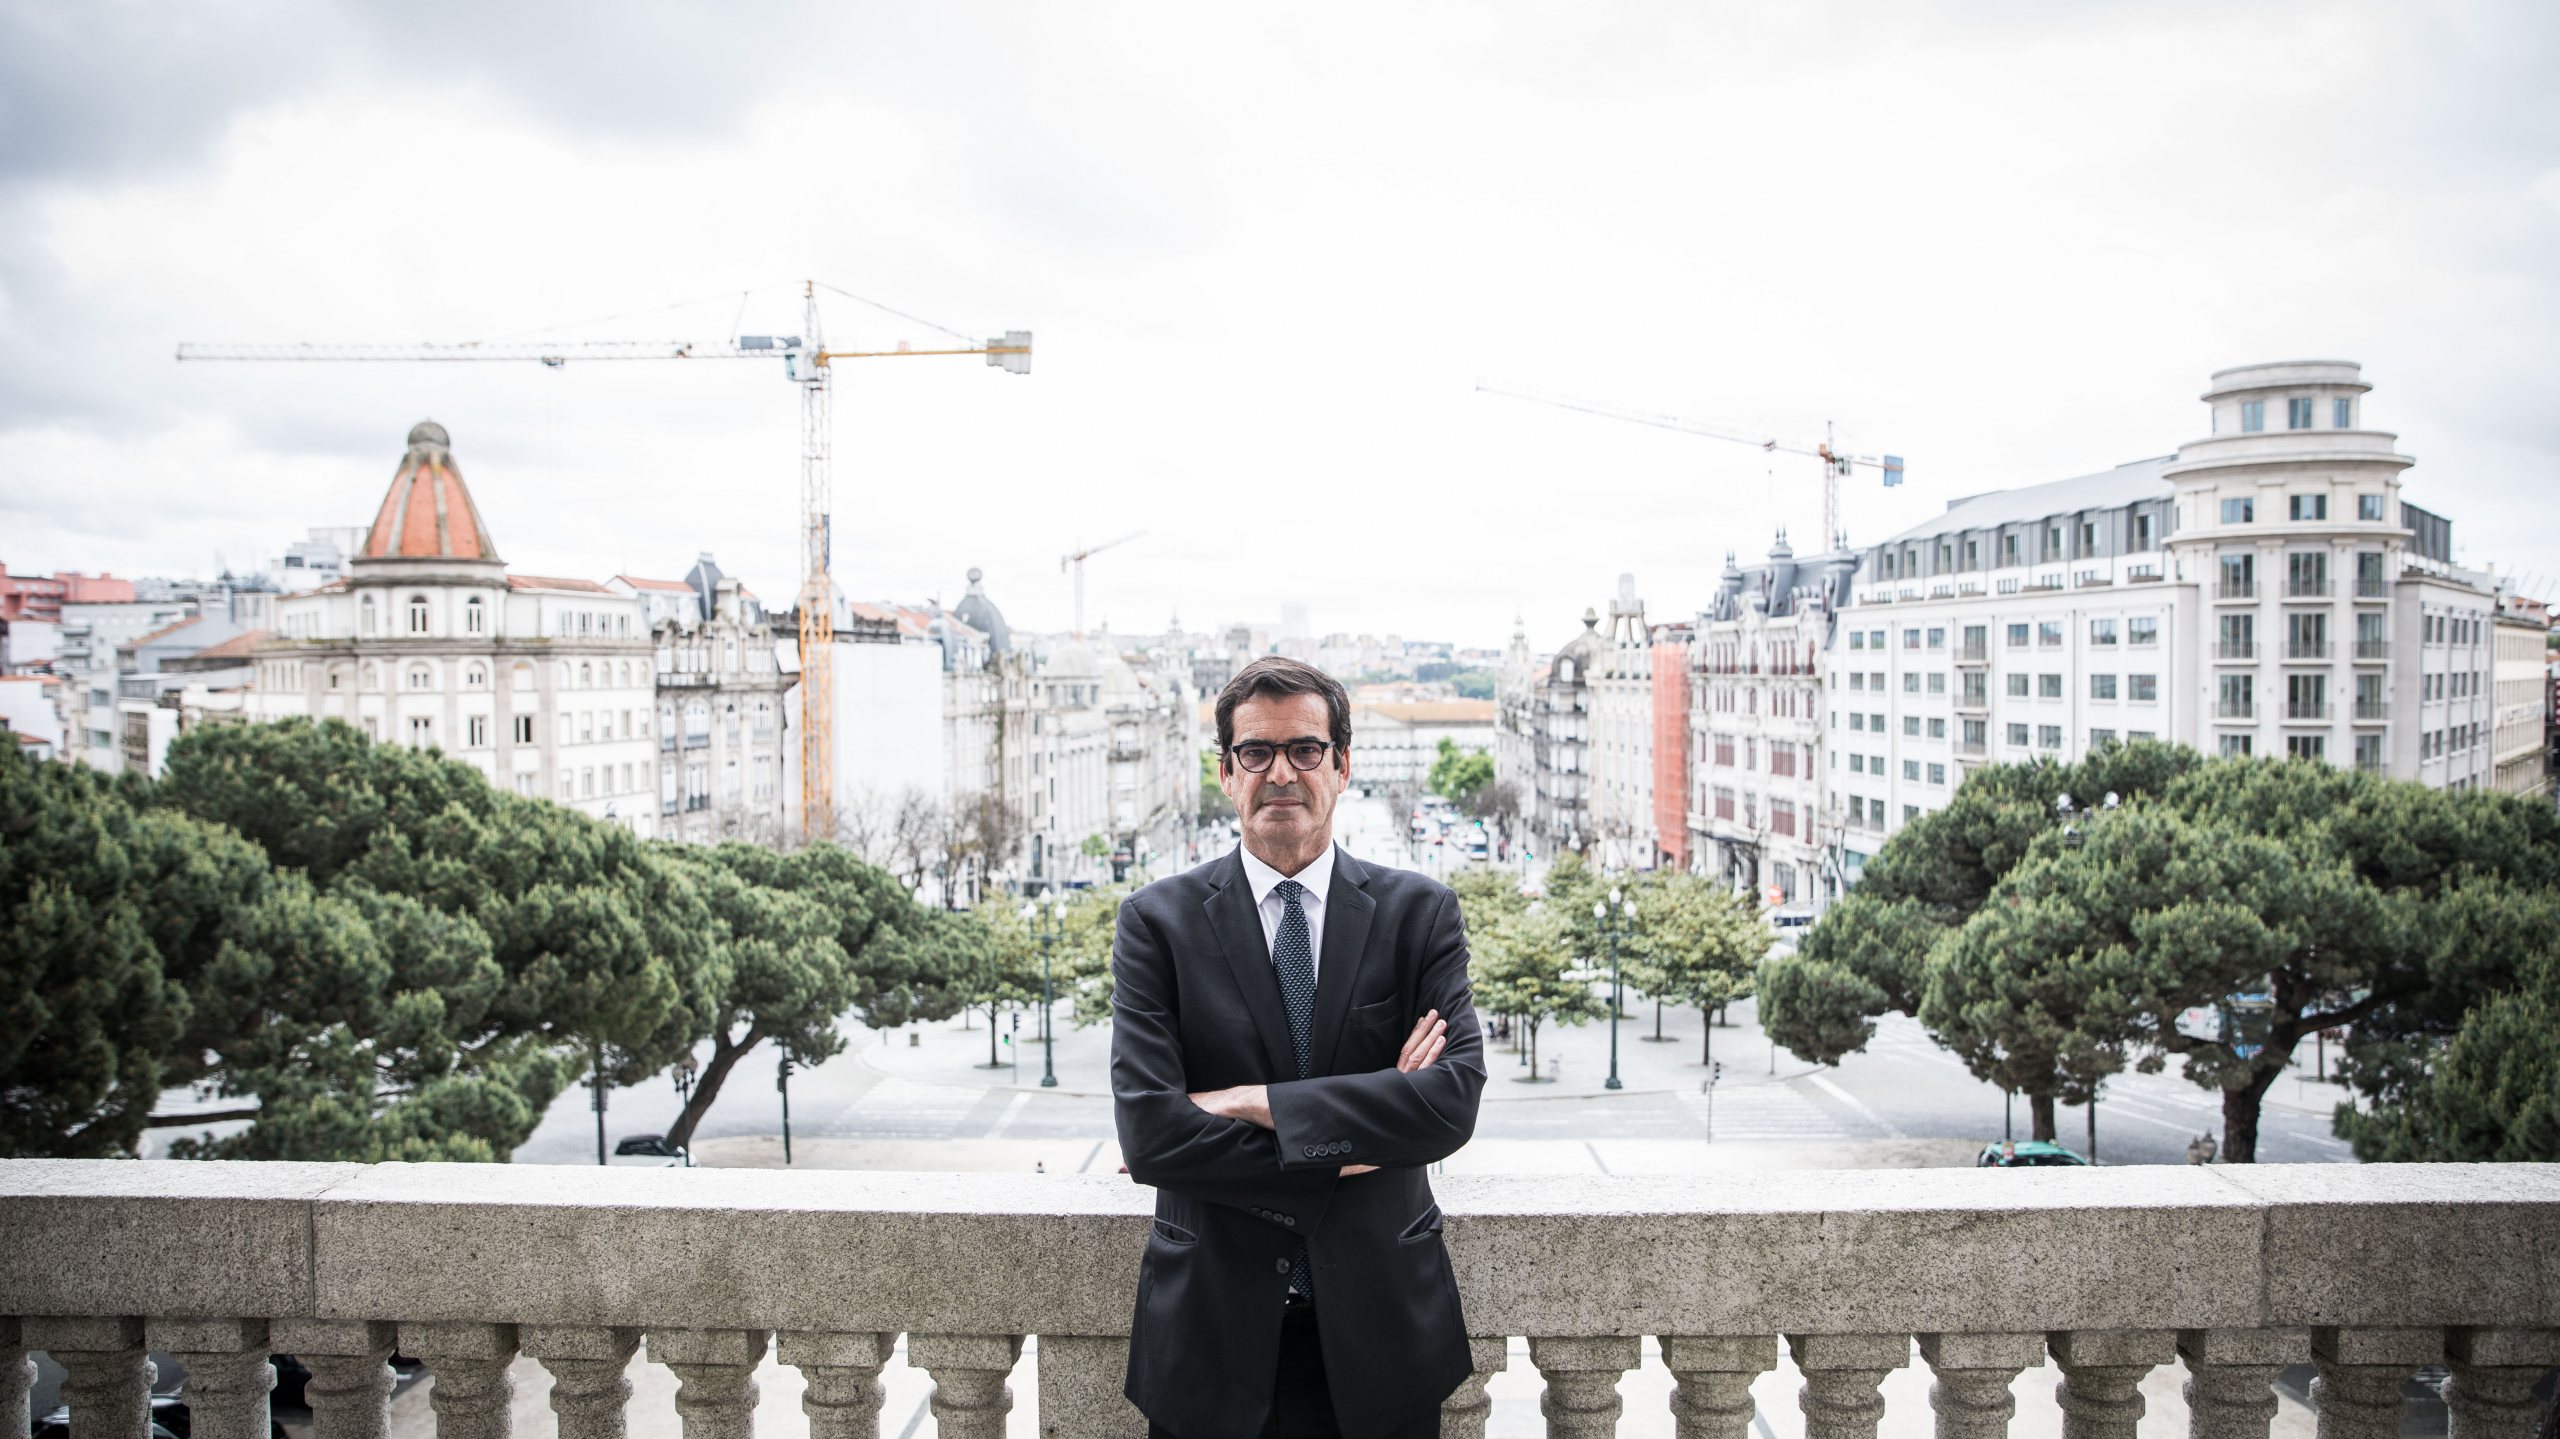 O presidente da Câmara do Porto, Rui Moreira, indicou que o programa vai permitir apoiar 1.625 estabelecimentos